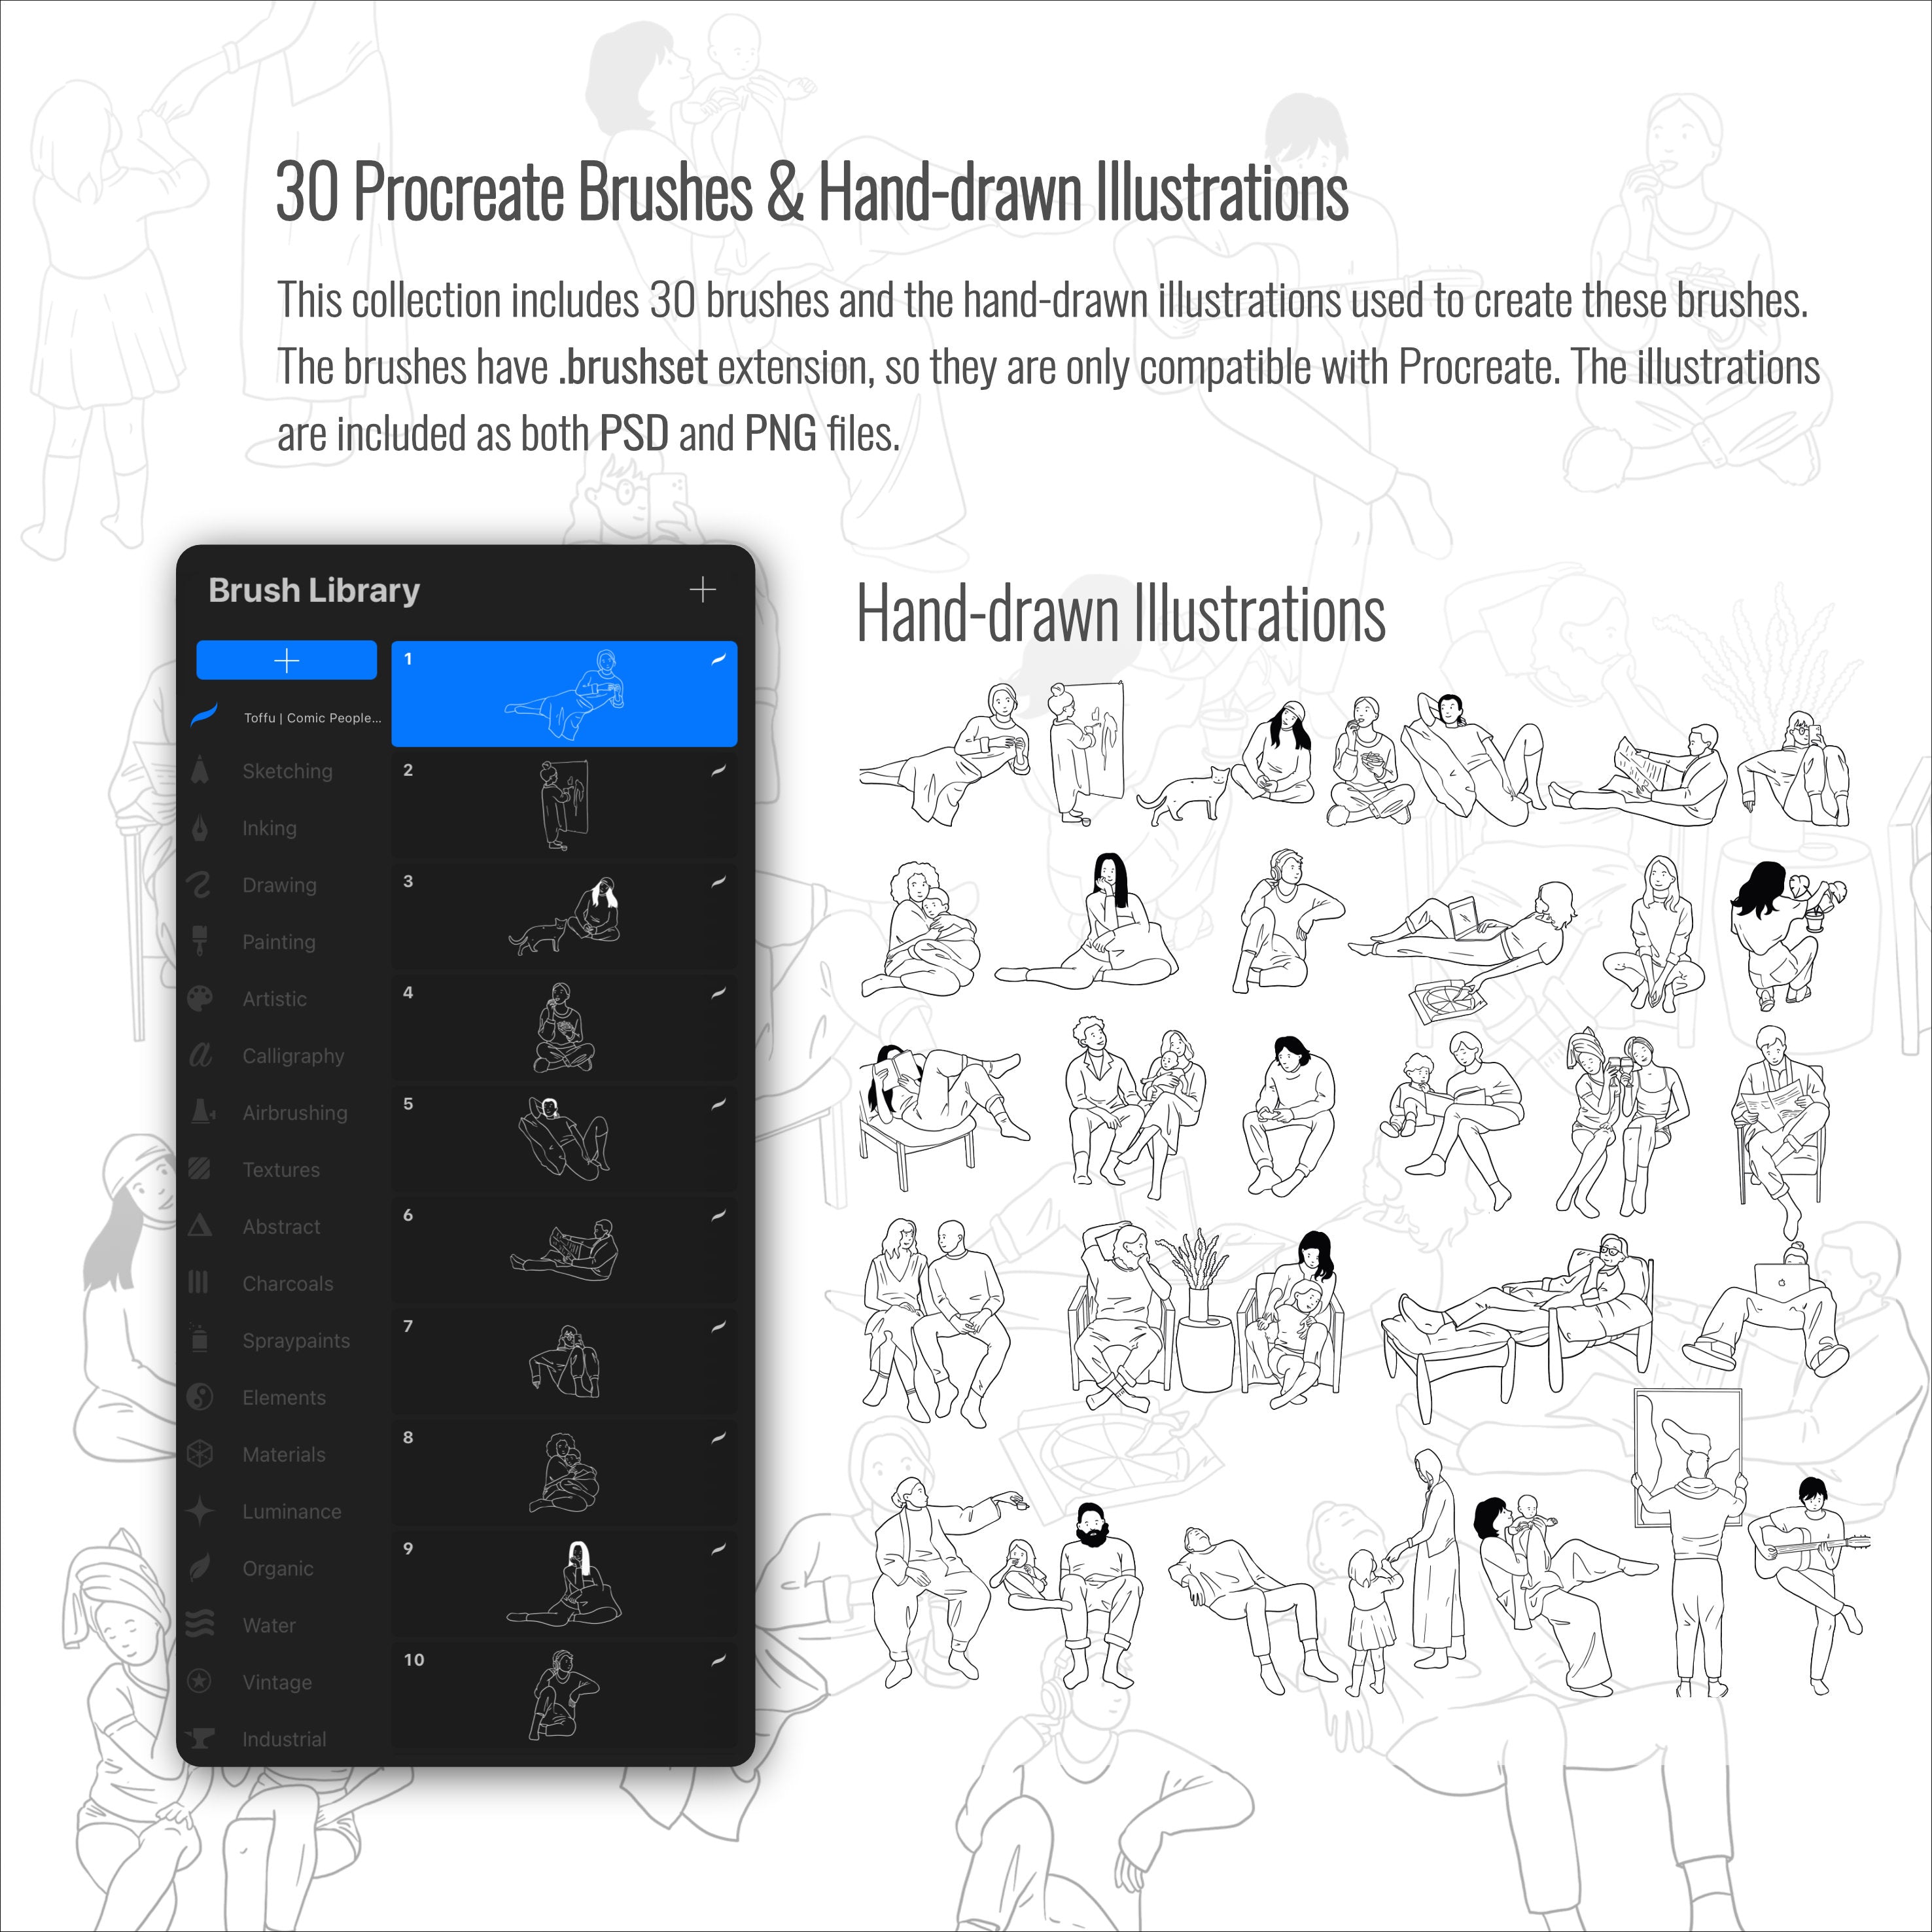 Procreate Comic People Interior Brushset & Illustrations 2 PNG - Toffu Co